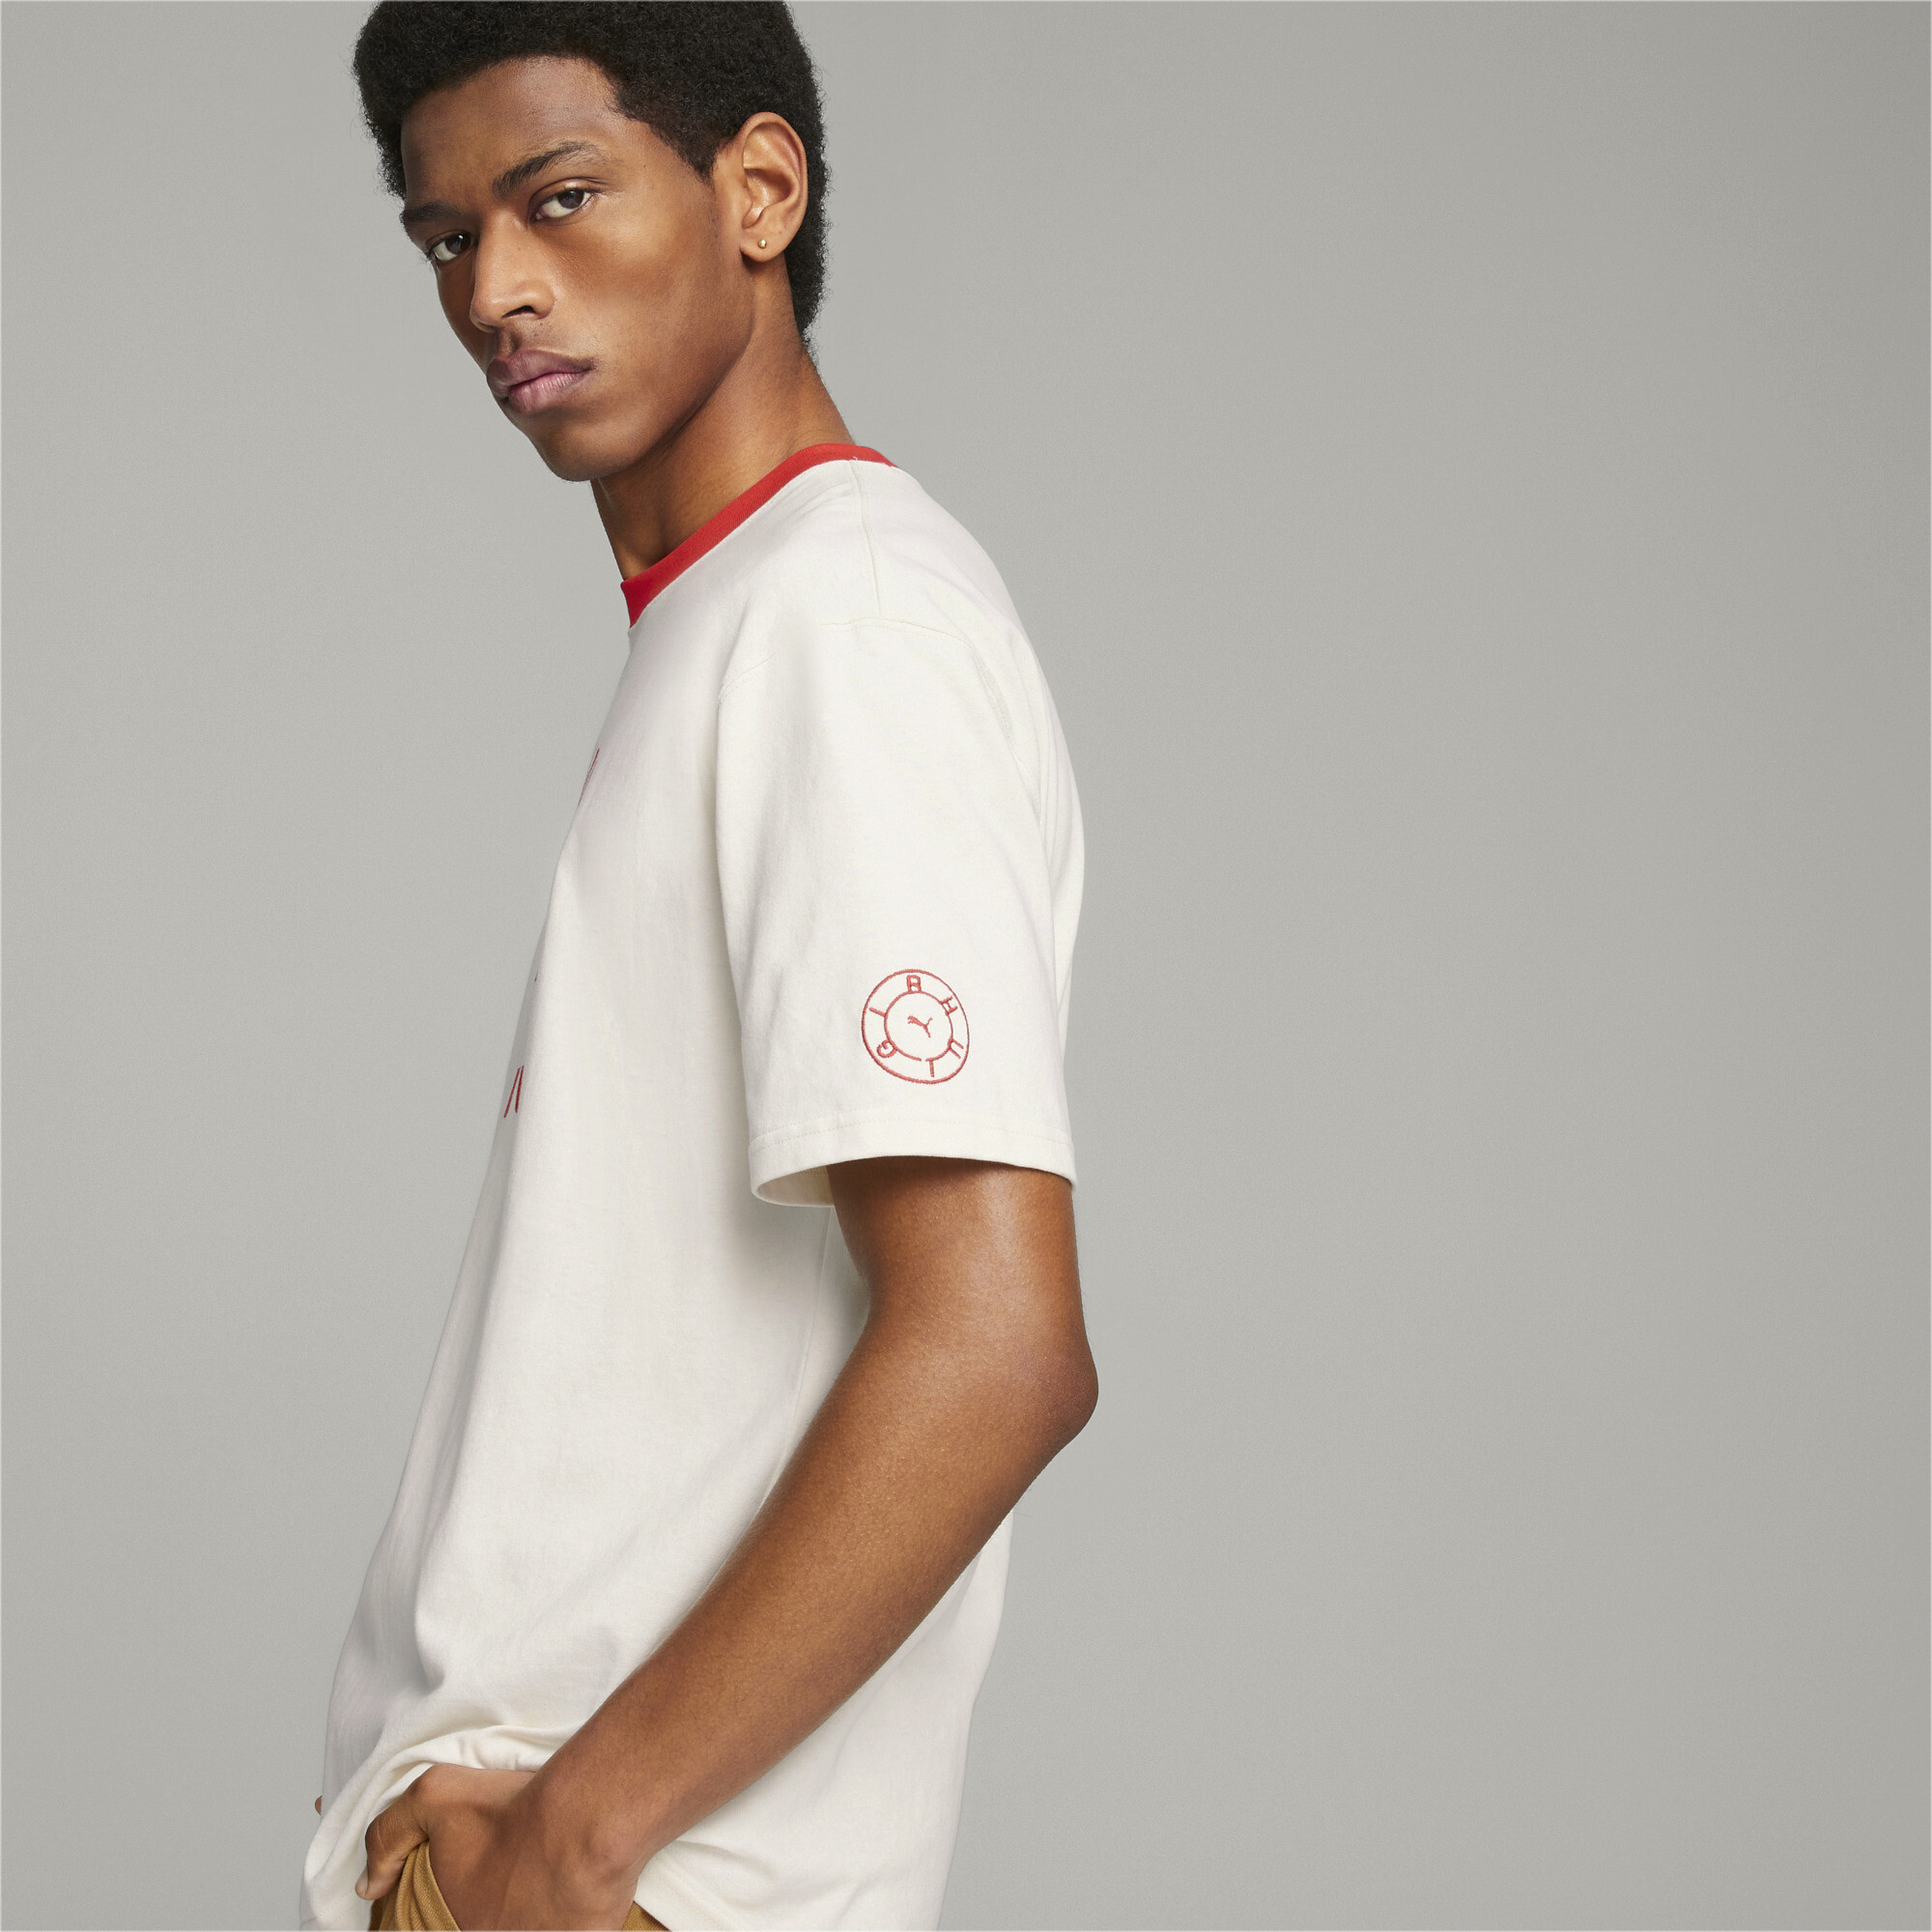 Men's PUMA X RHUIGI Graphic T-Shirt In White, Size Medium